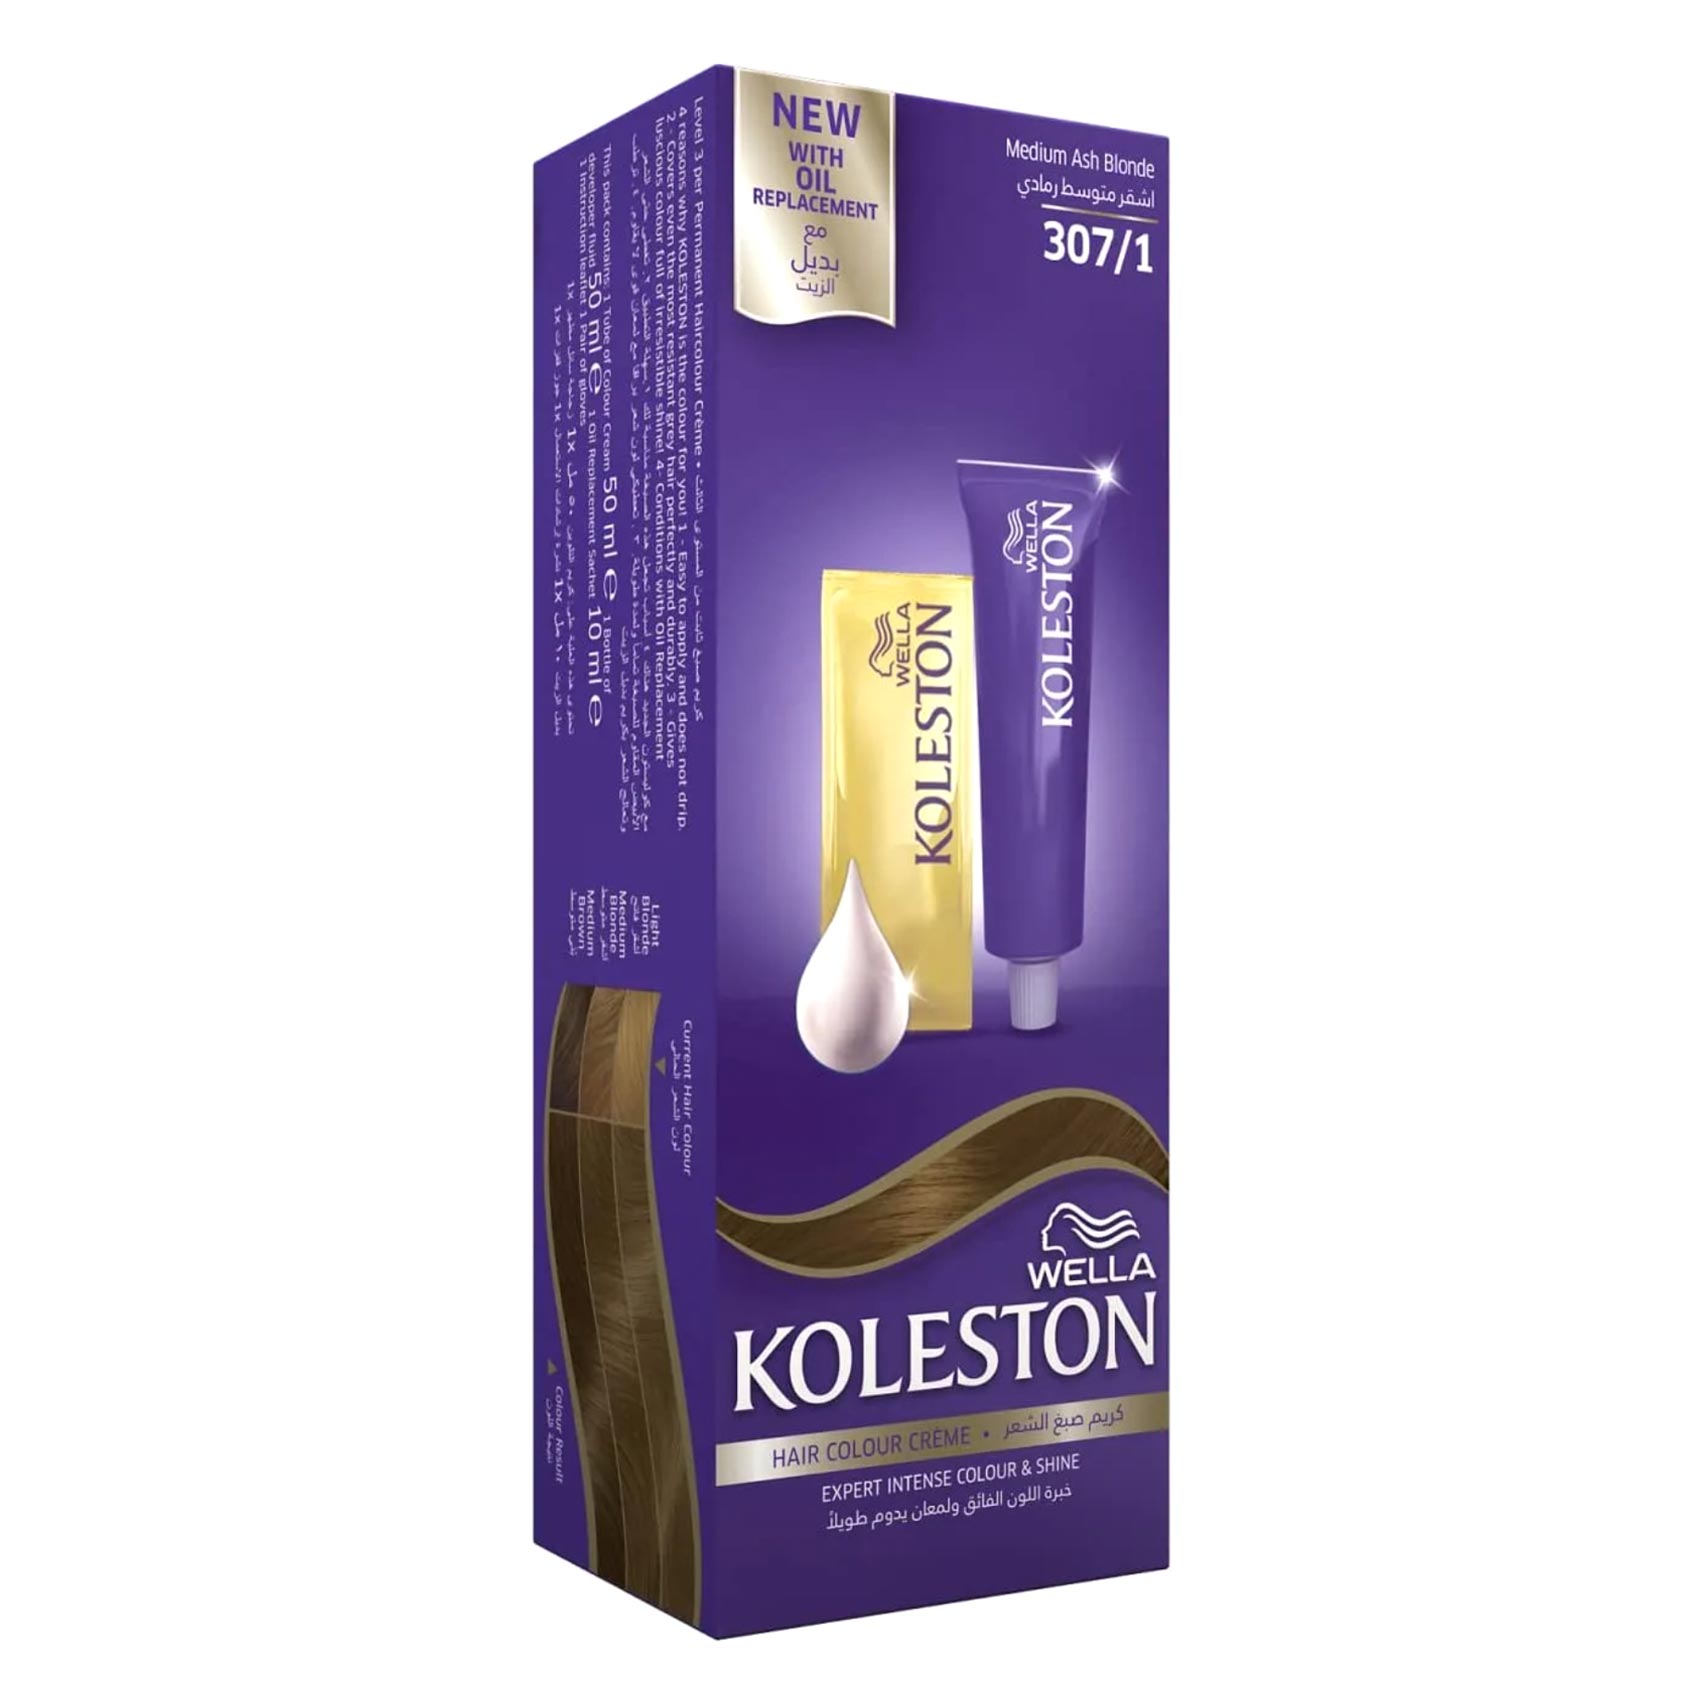 Wella Koleston Expert Intense Colour And Shine Hair Colour Creme 60ML 307/1 Medium Ash Blonde